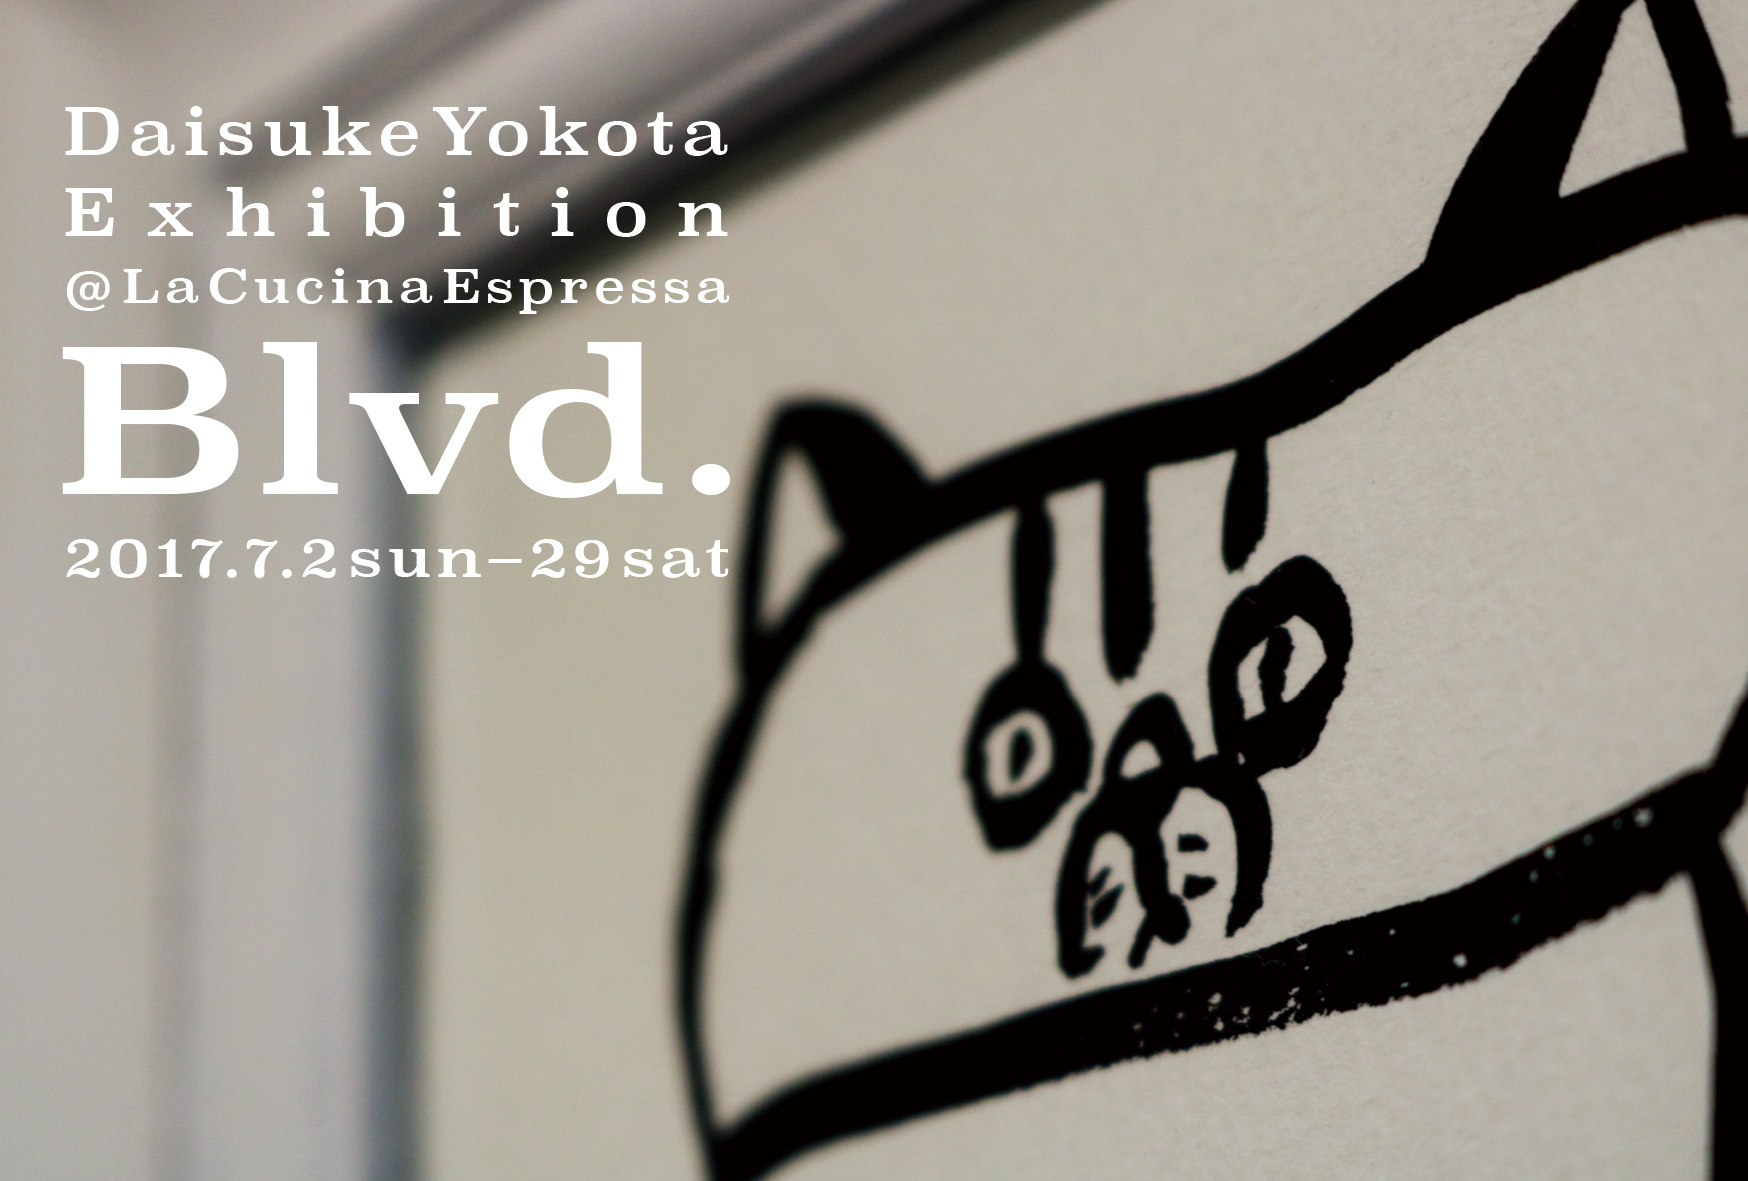 Daisuke Yokota Exhibition「Blvd.」